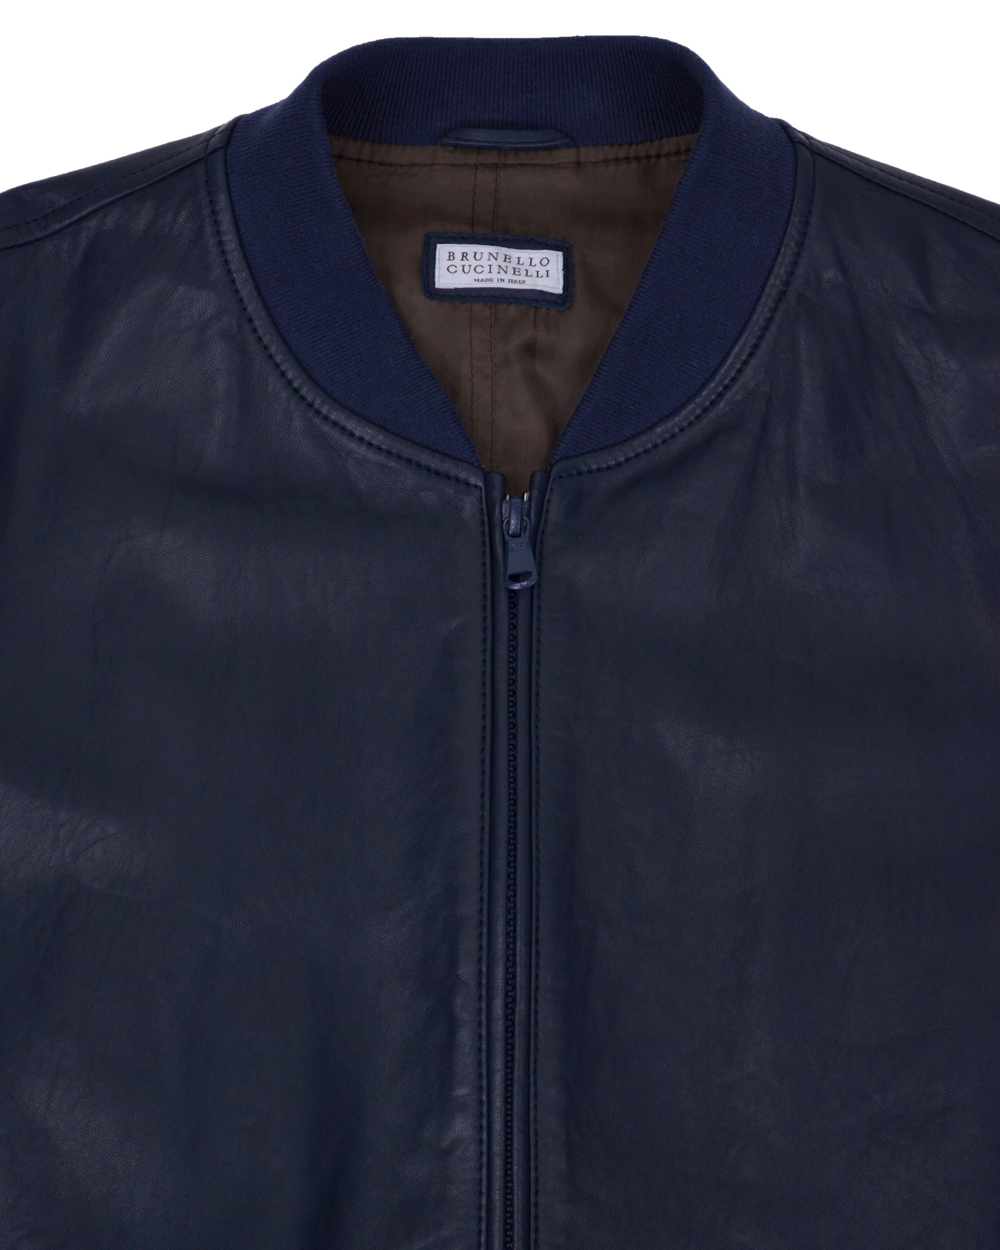 Lyst - Brunello Cucinelli Blue Leather Bomber Jacket in Blue for Men